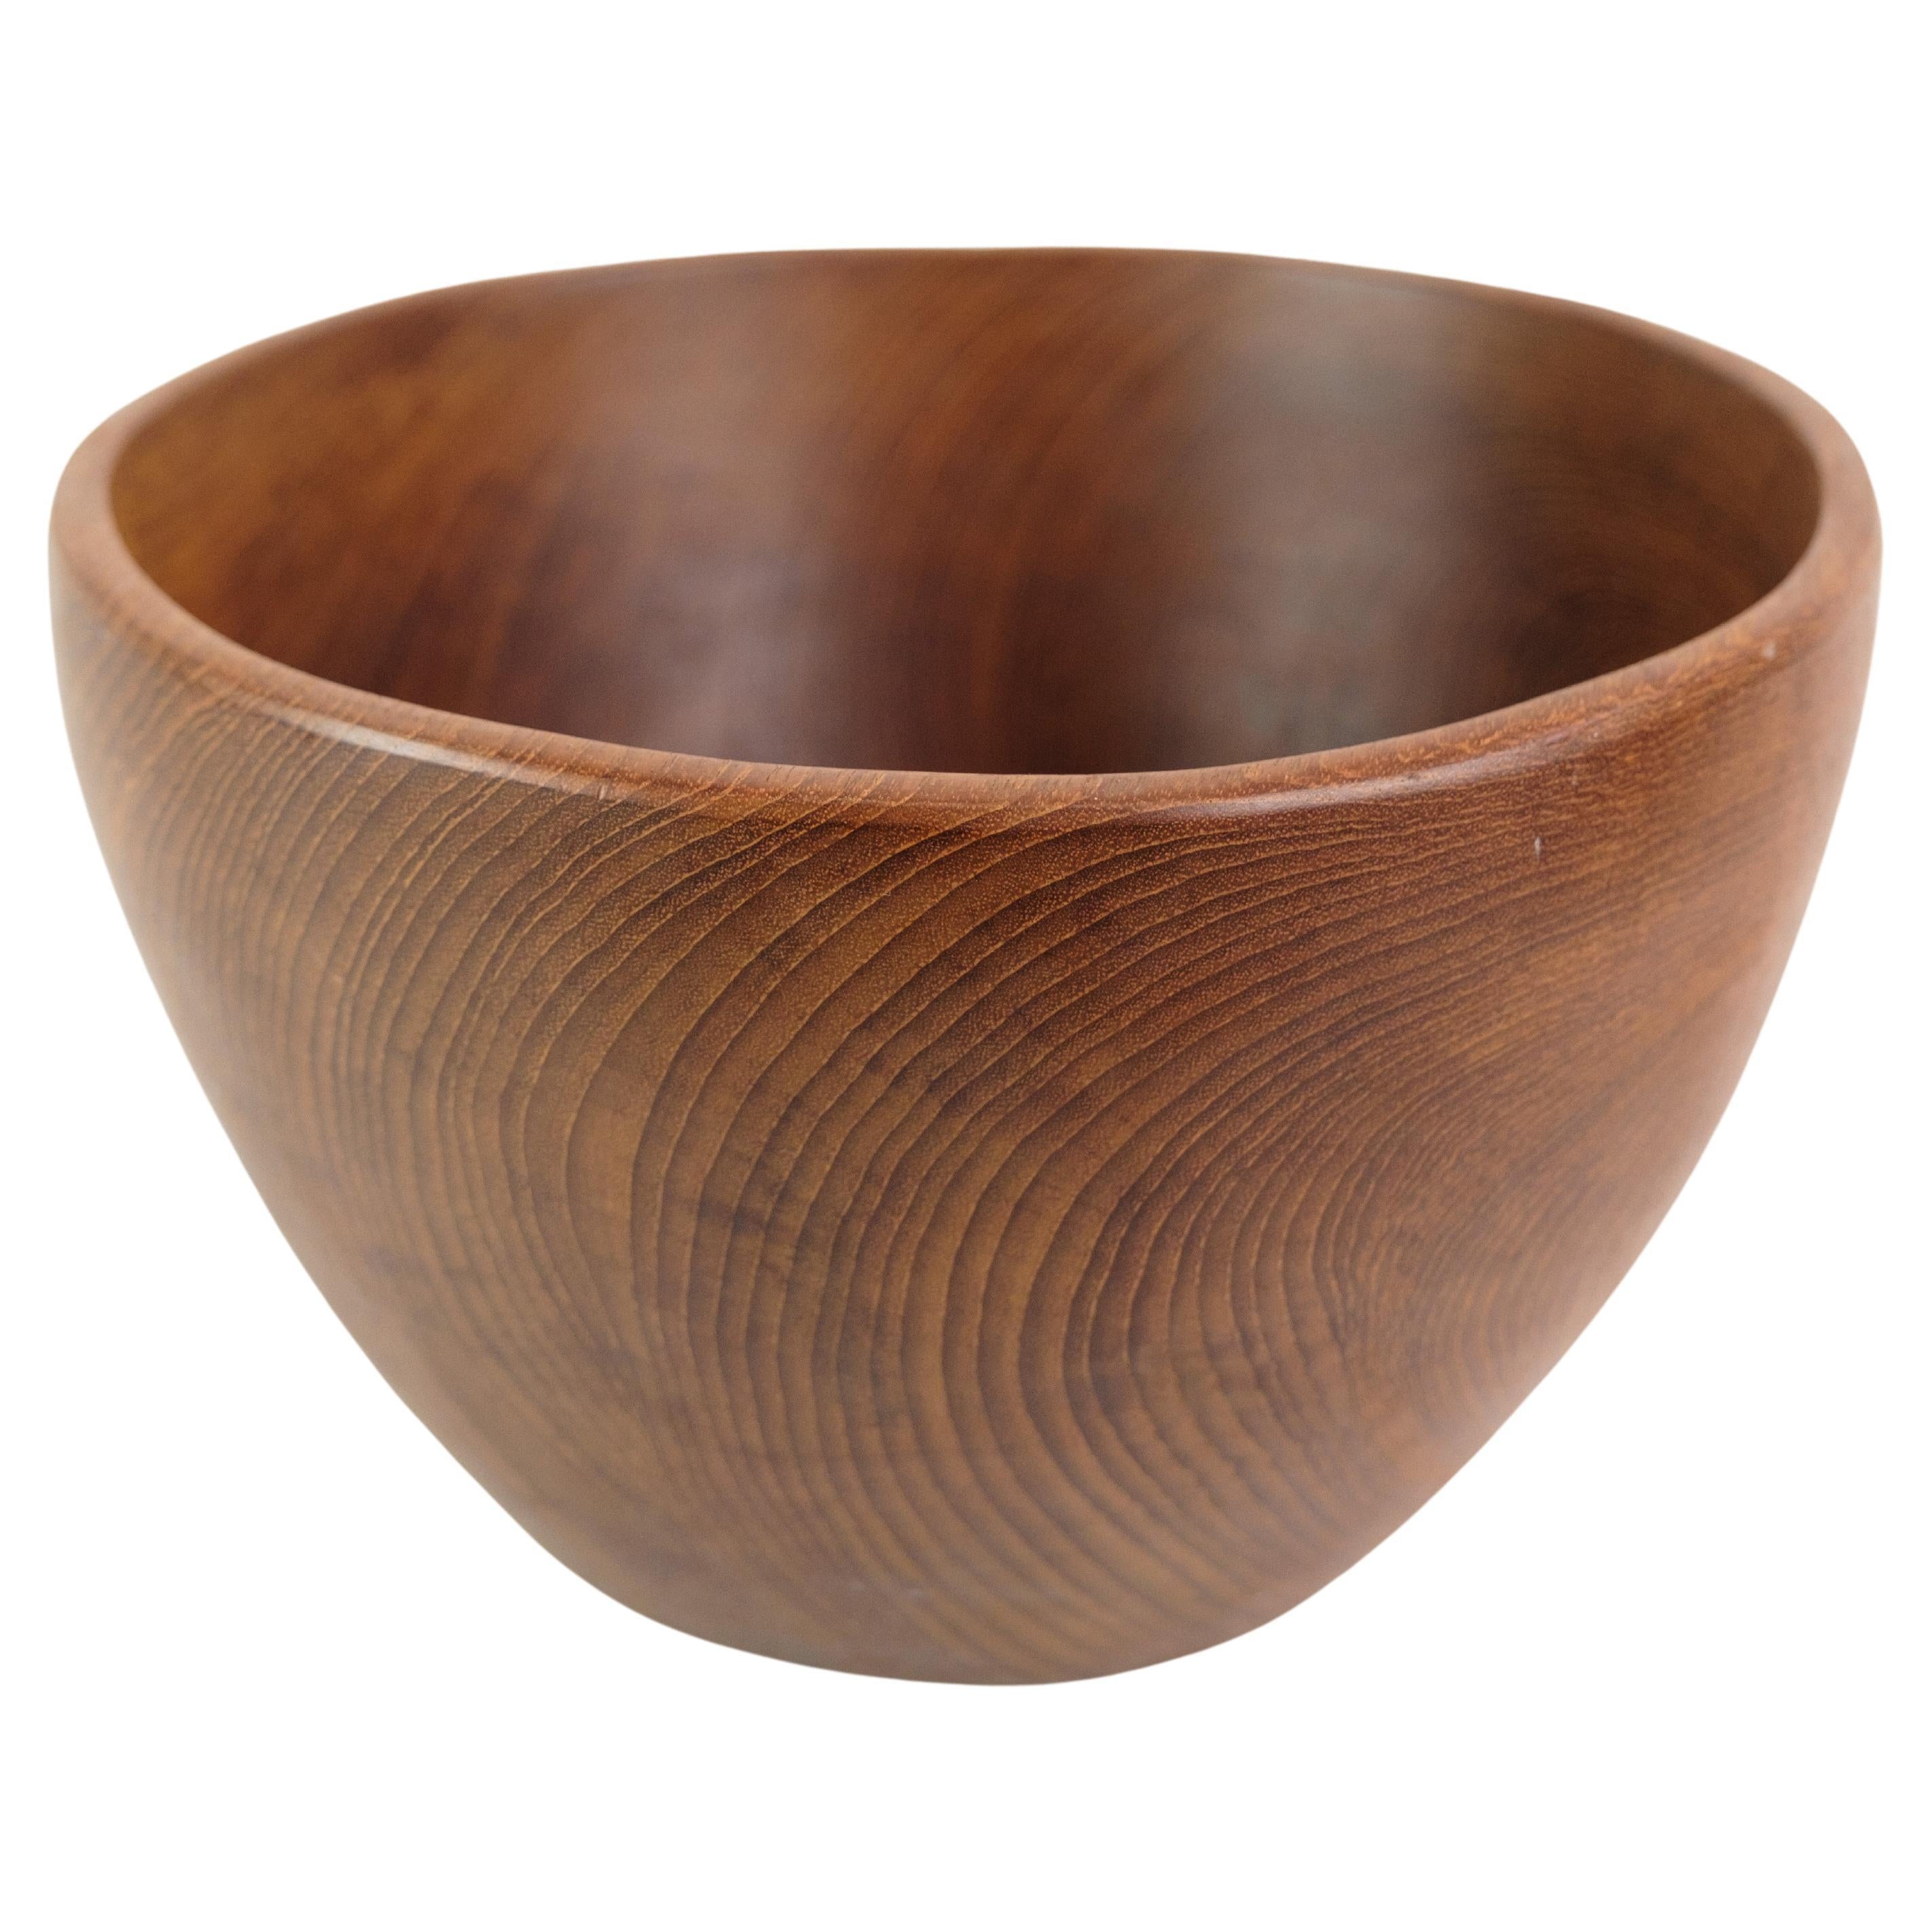 Bowl Made In Teak, Danish Design From 1960s